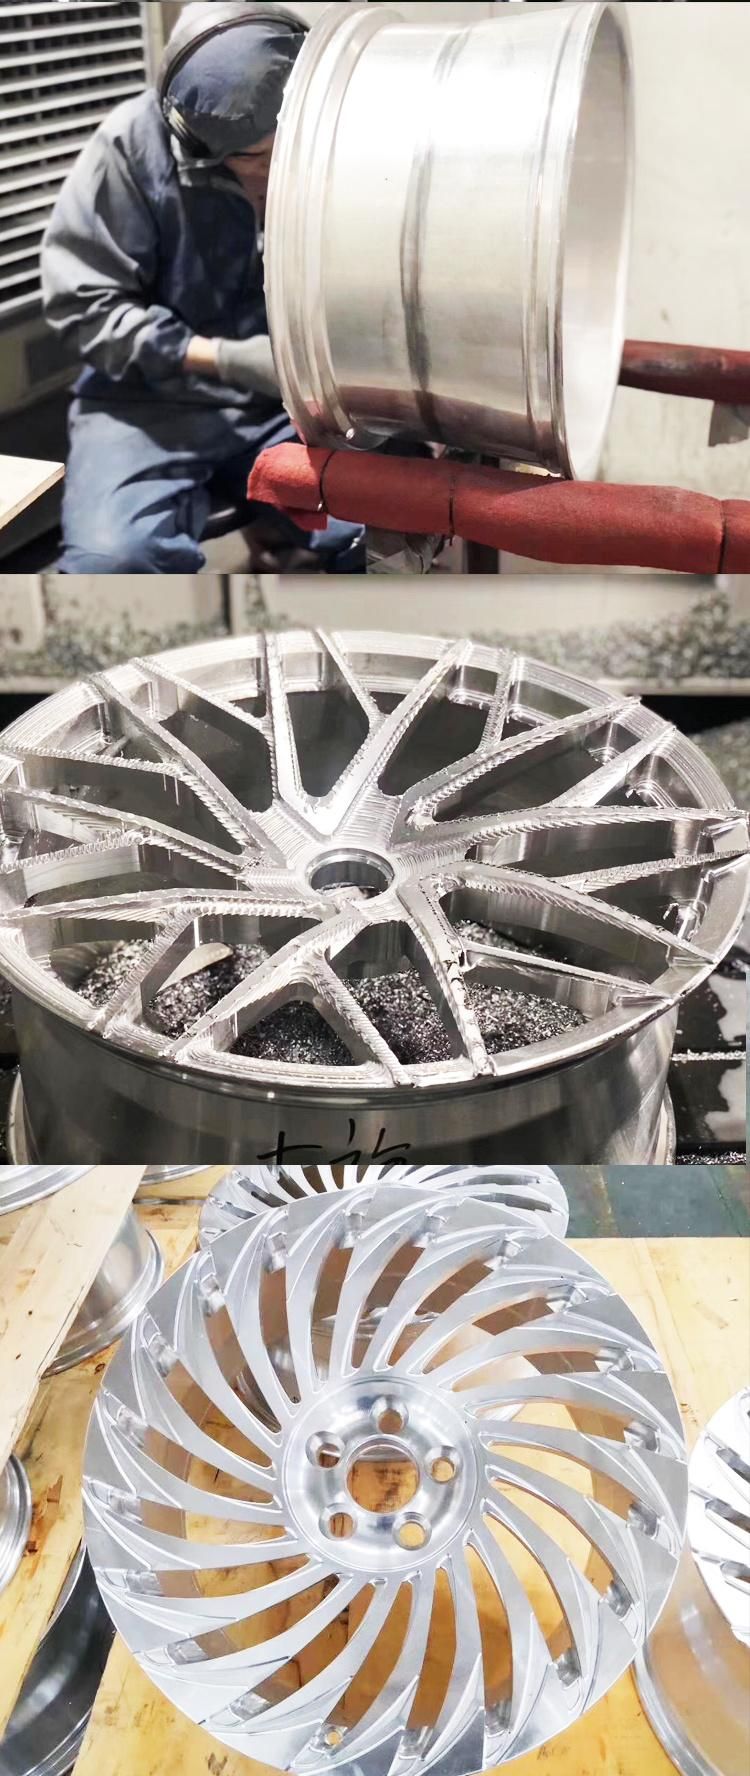 1 Piece Forged T6061 Alloy Rims Sport Aluminum Wheels for Customized Mag Rims Alloy Wheelst6061 Material with Matt Gun Metal